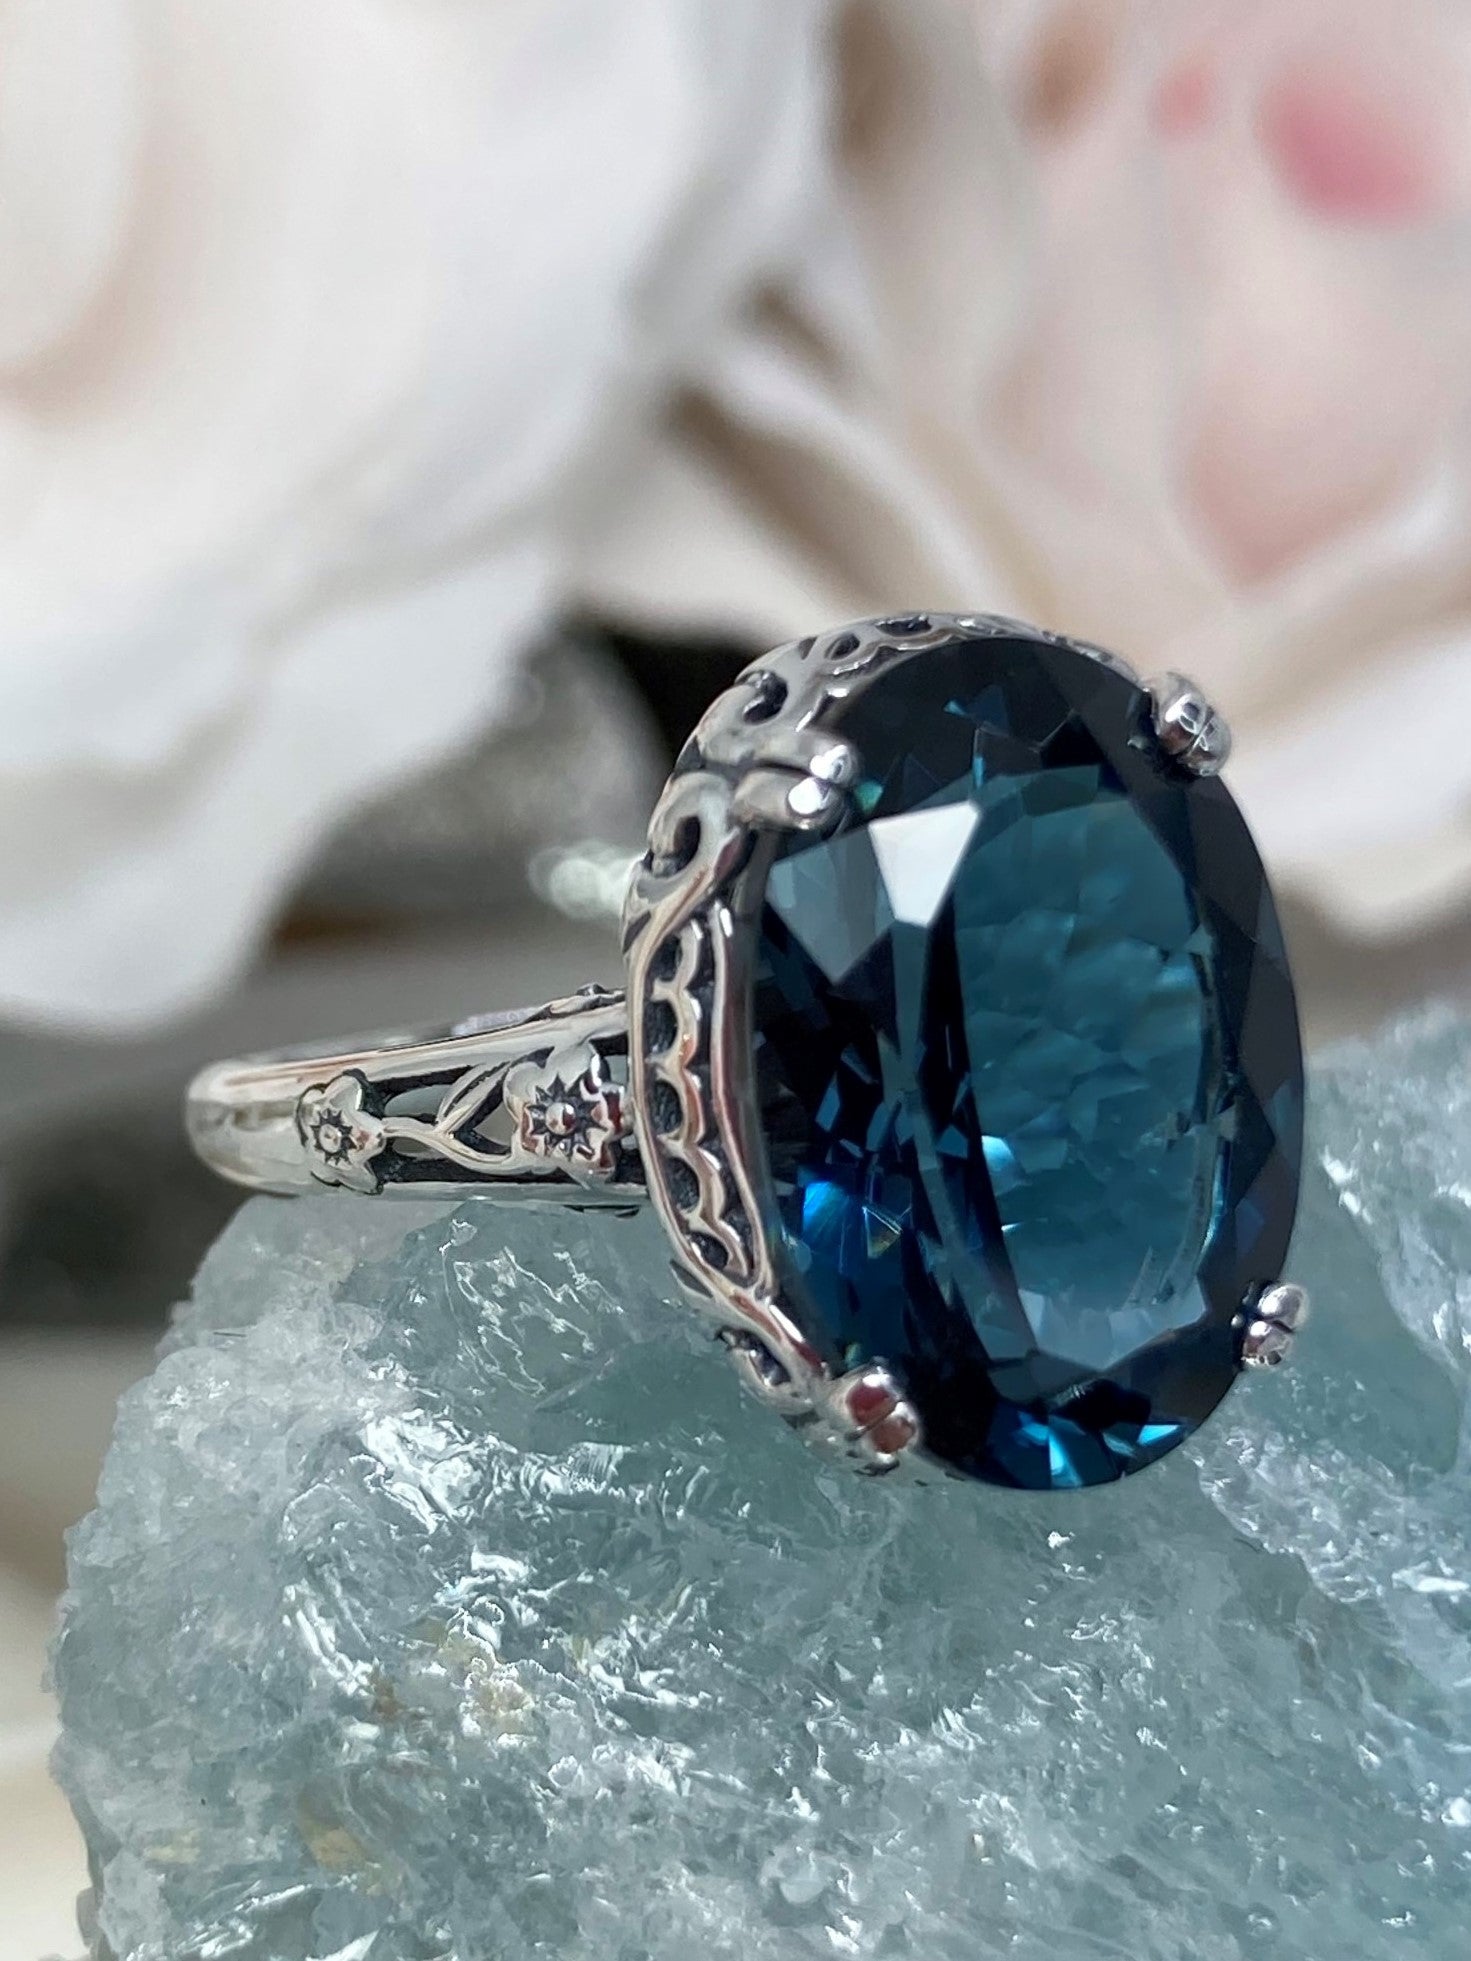 Vintage London Blue Topaz Engagement Ring